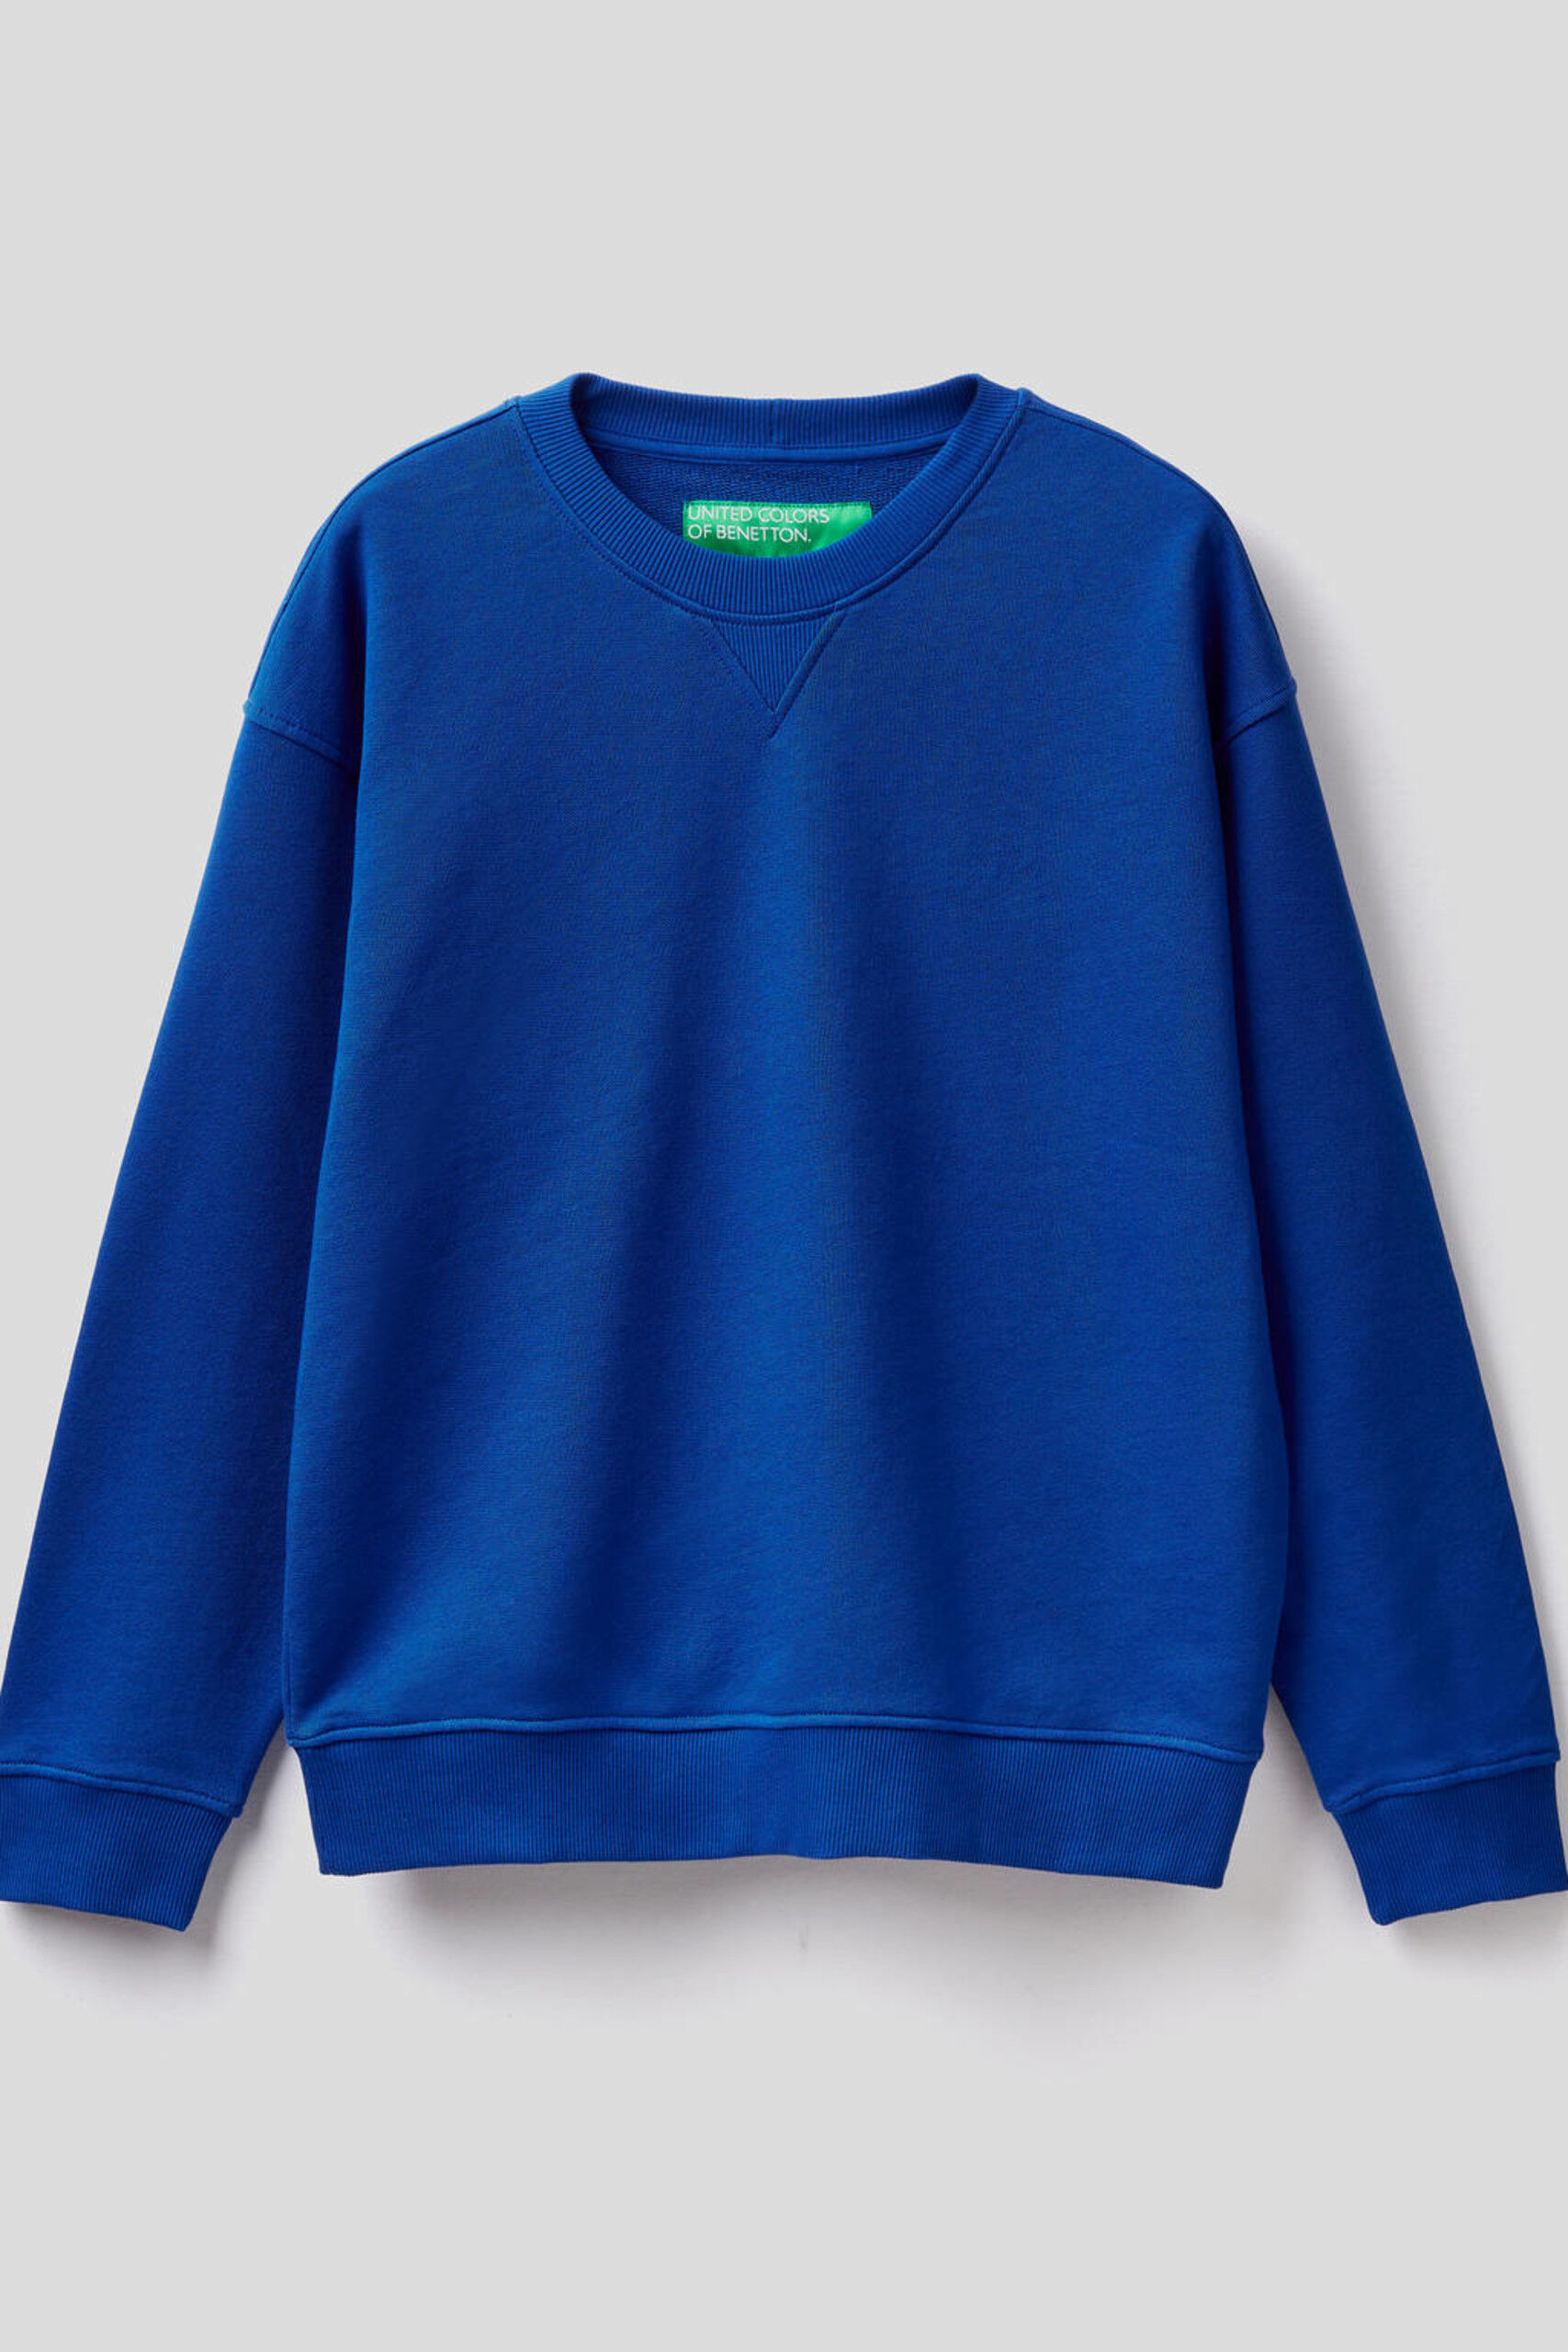 Women's Sweatshirts without hood Collection 2021 | Benetton